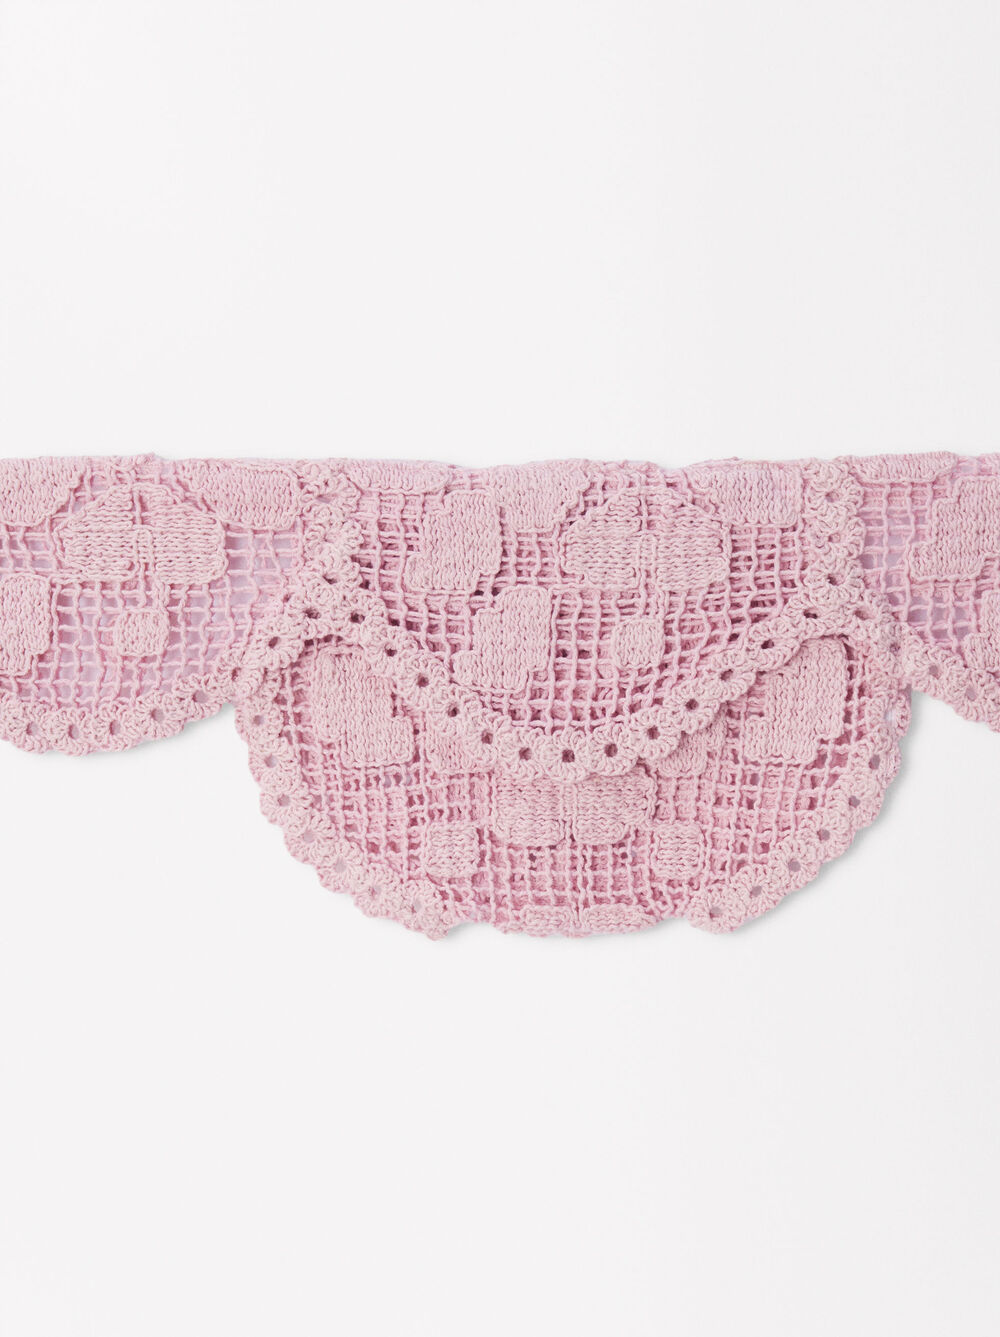 Exclusivo Online - Bolso Riñonera Crochet